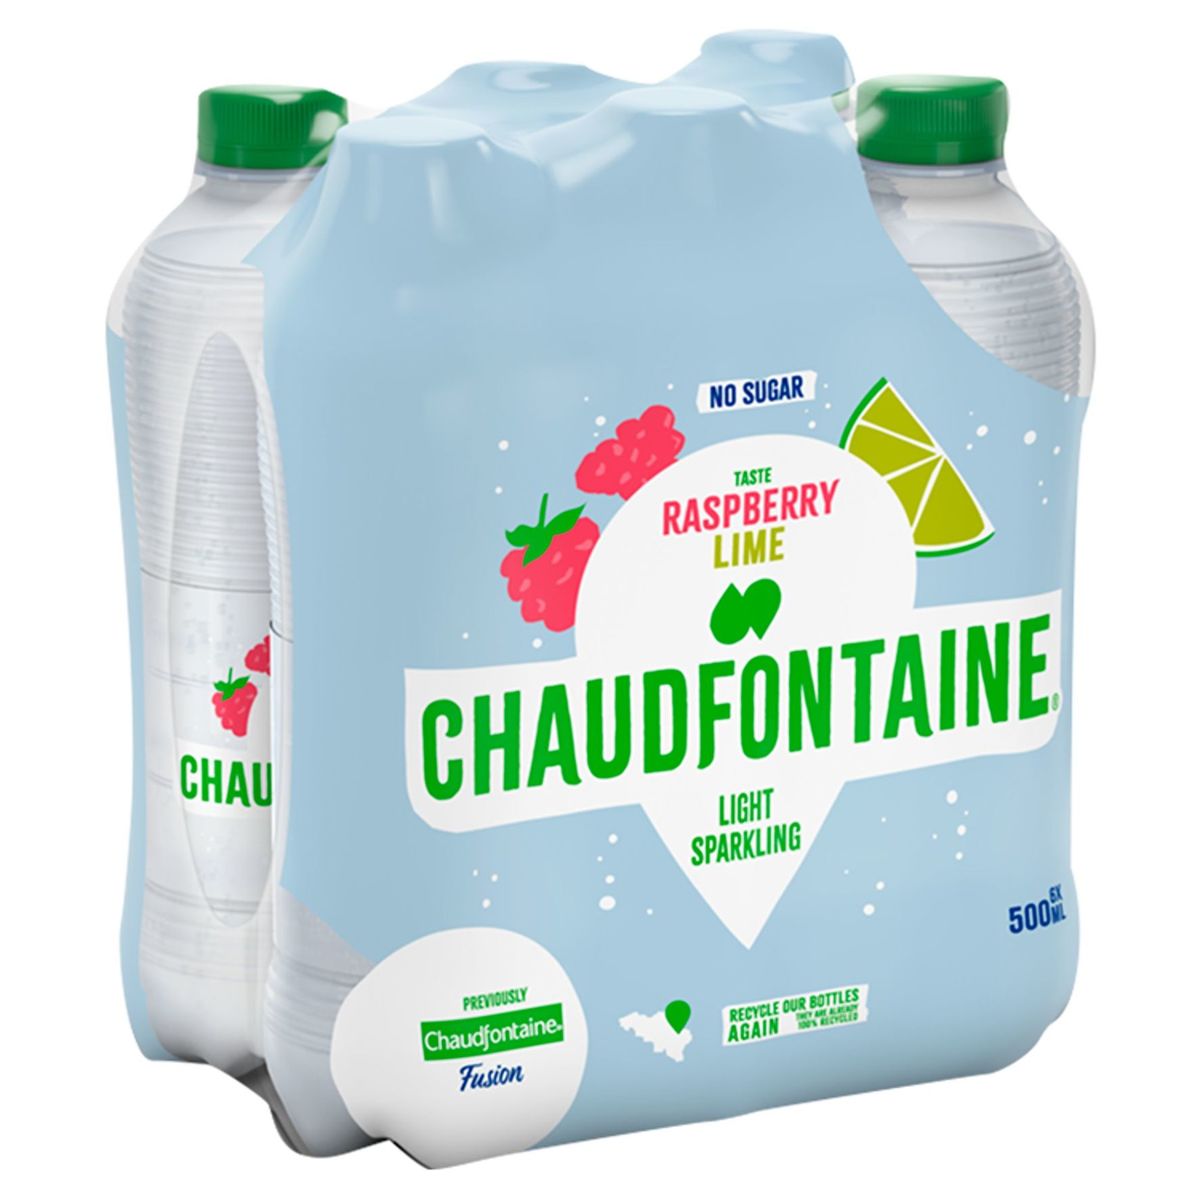 Chaudfontaine Raspberry Lime Sparkling No Sugar Pet 500 ml X 6